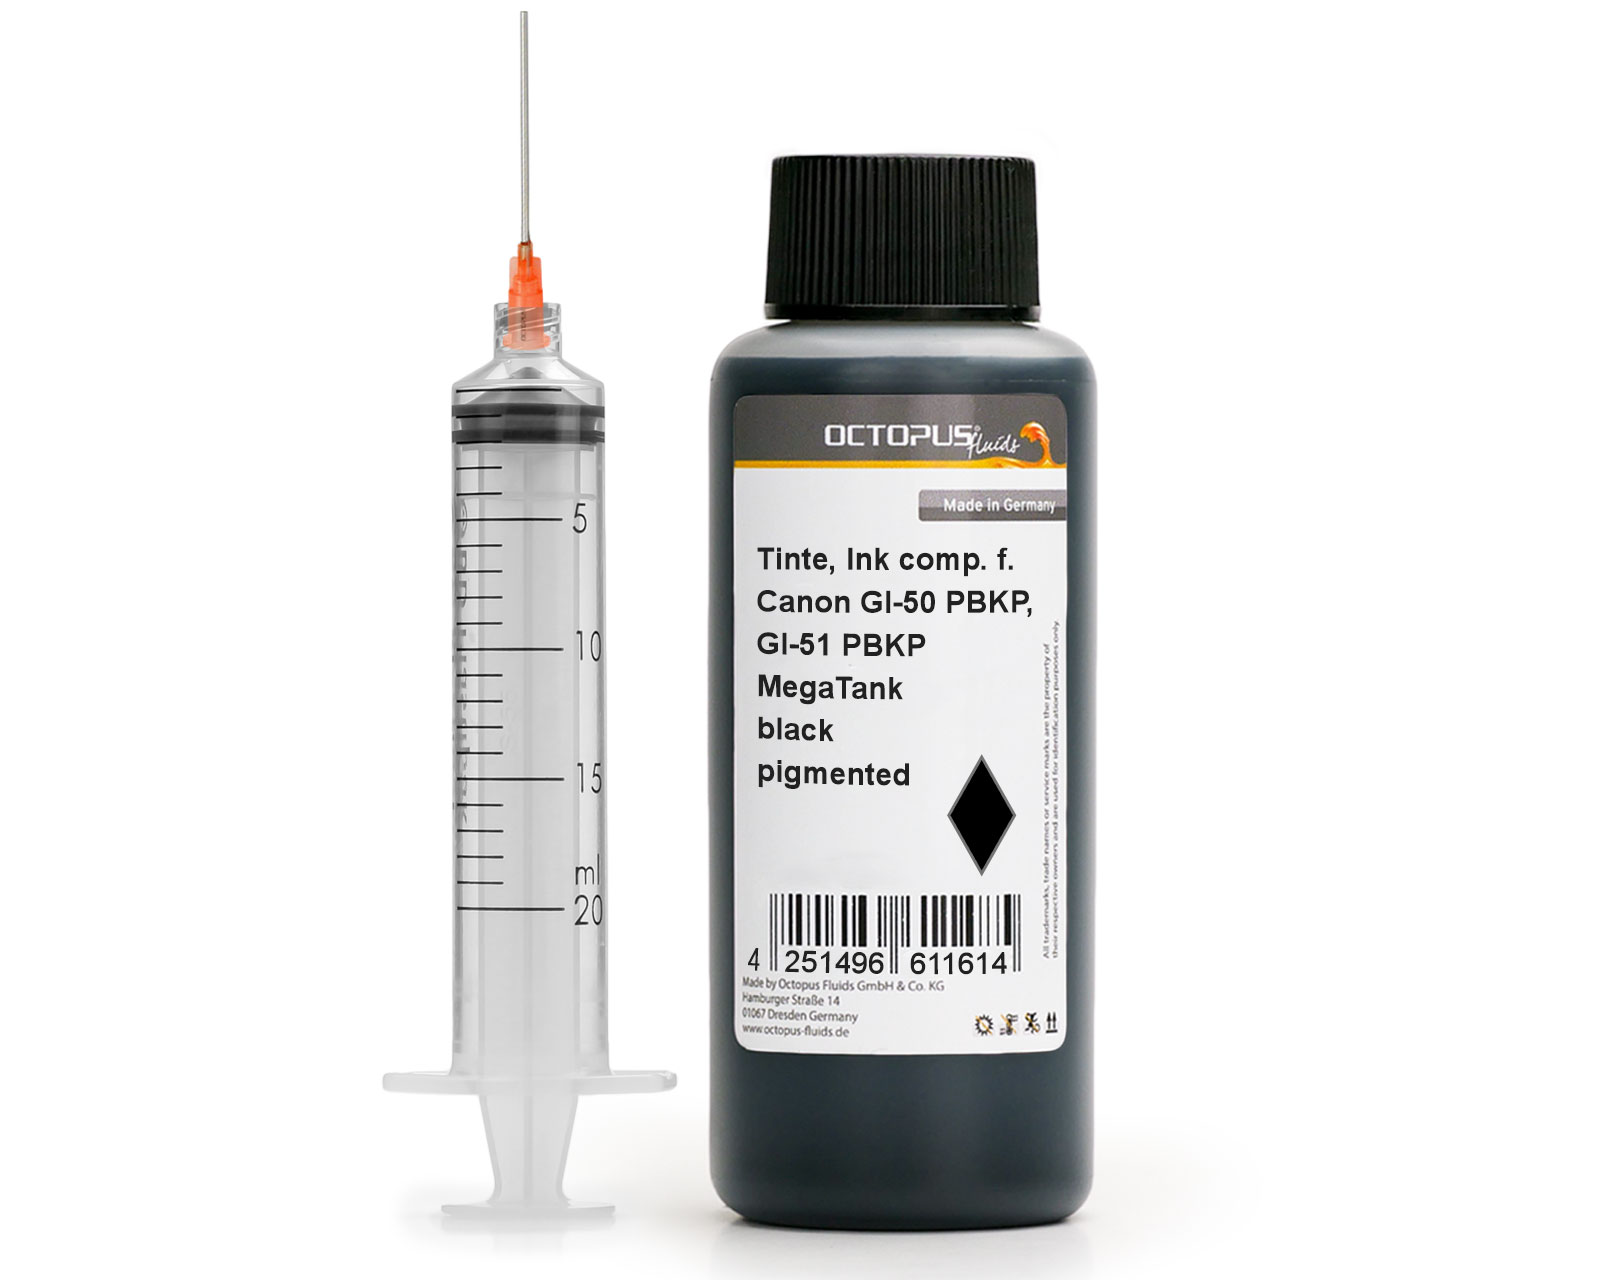 
Refill ink for Canon GI-50 PBKP, GI-51 PBKP Pixma MegaTank black with syringe